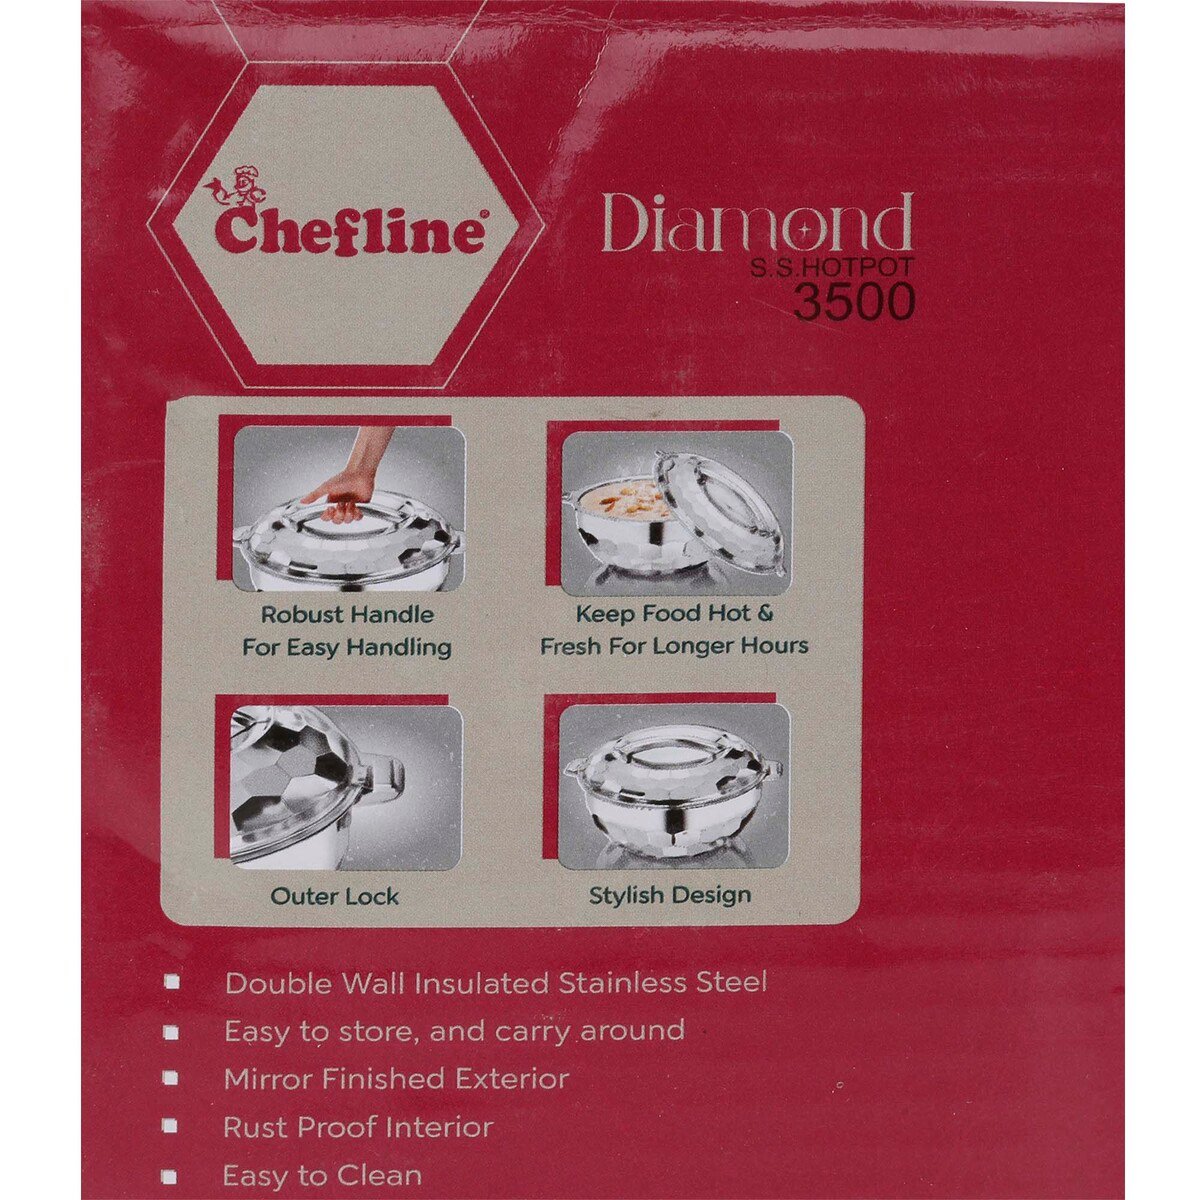 Chefline Stainless Steel Hot Pot Diamond, 3500 ml